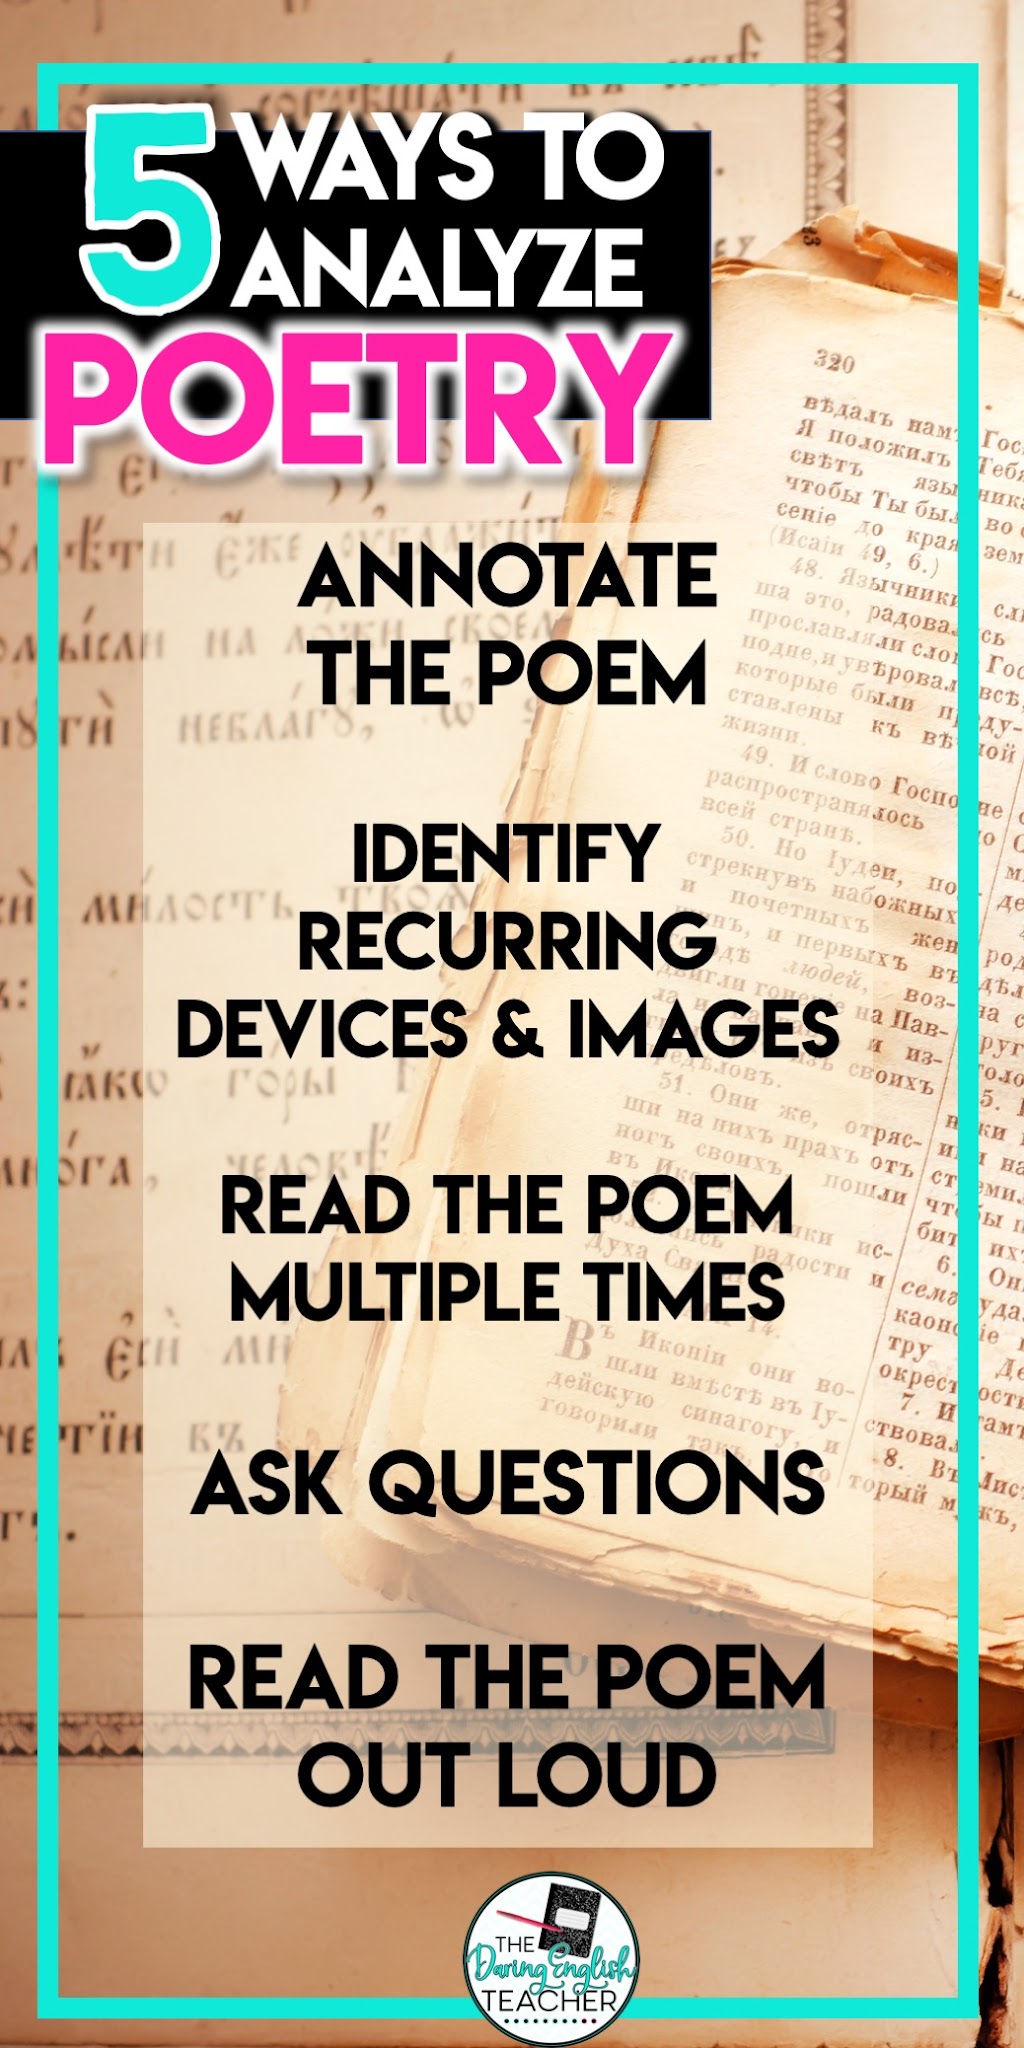 5 Ways to Analyze Poetry in the Secondary ELA Classroom